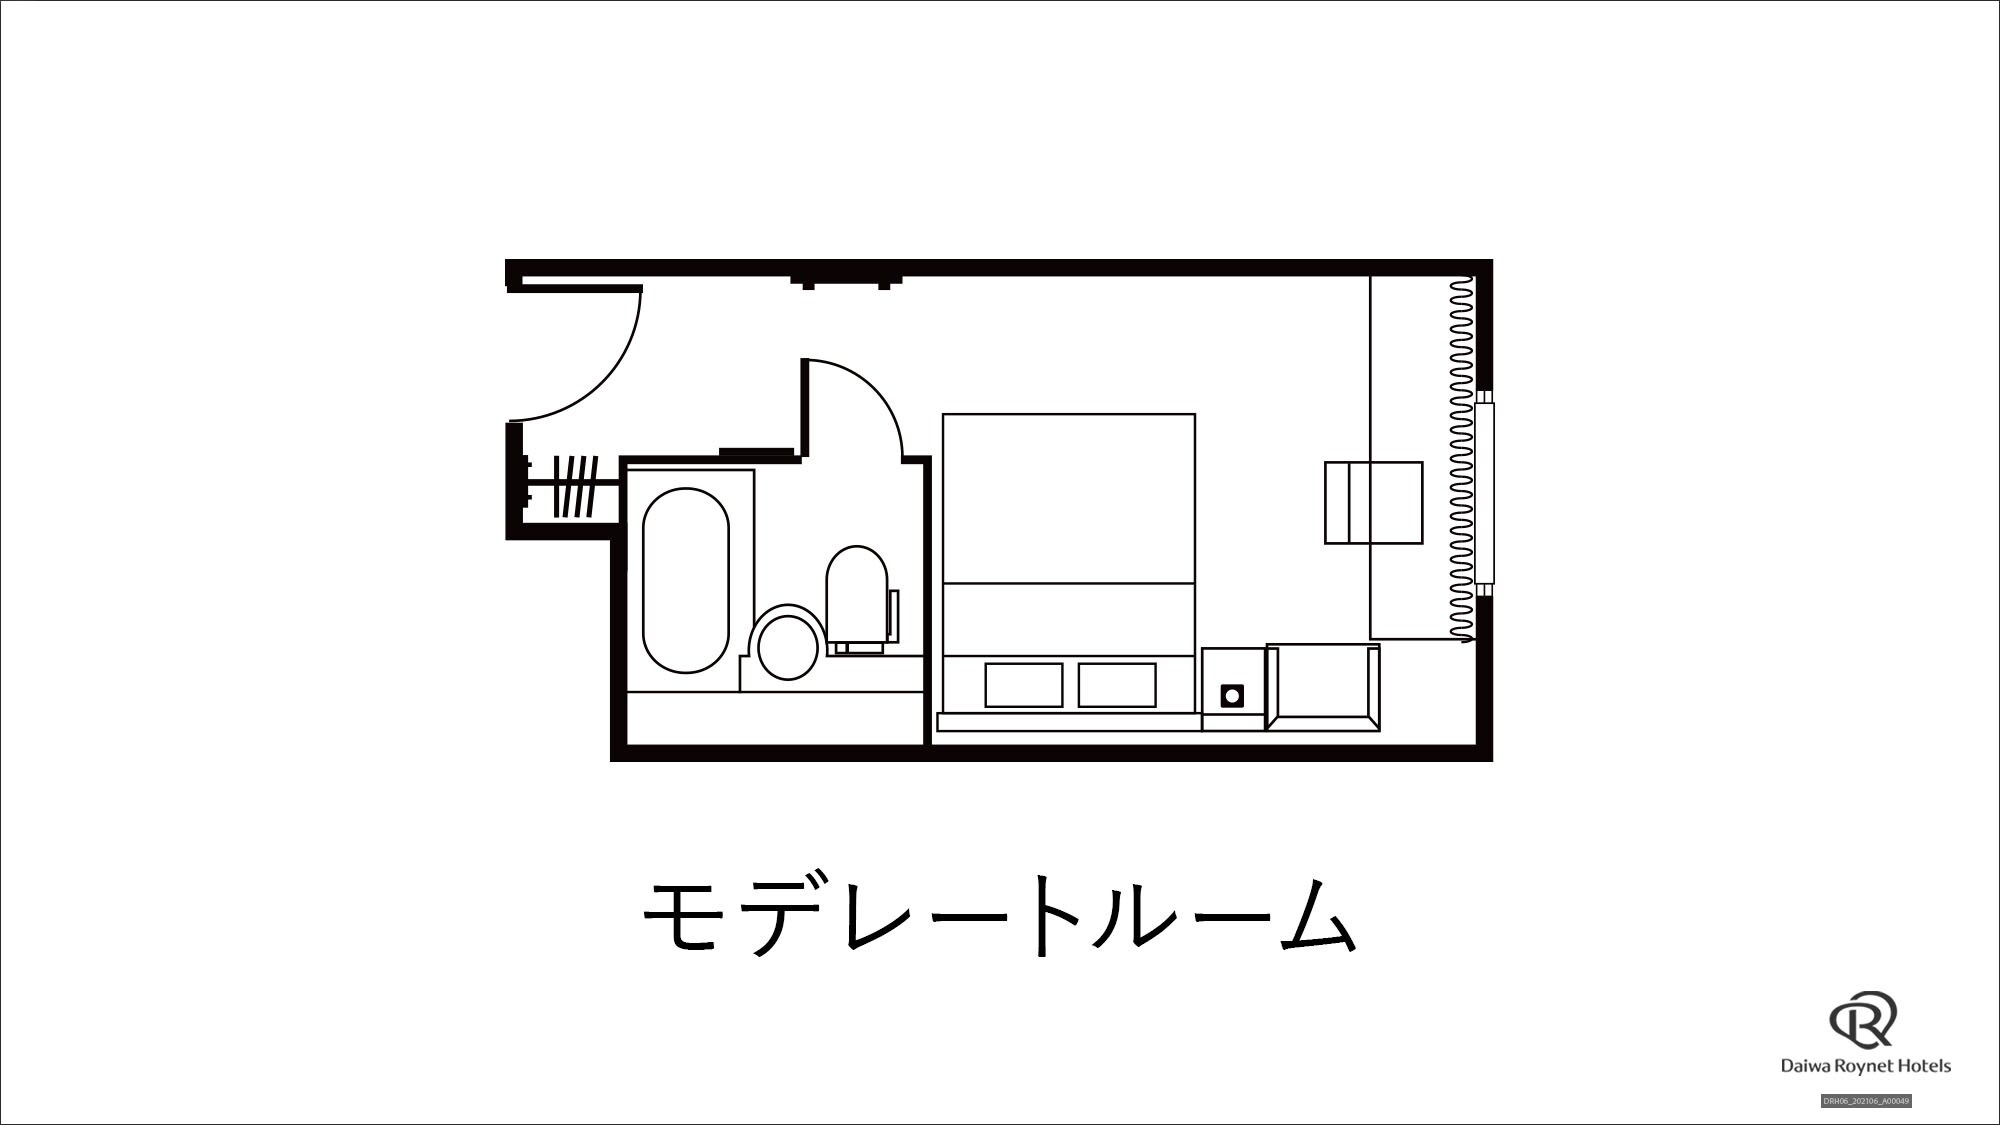 Moderate room floor plan